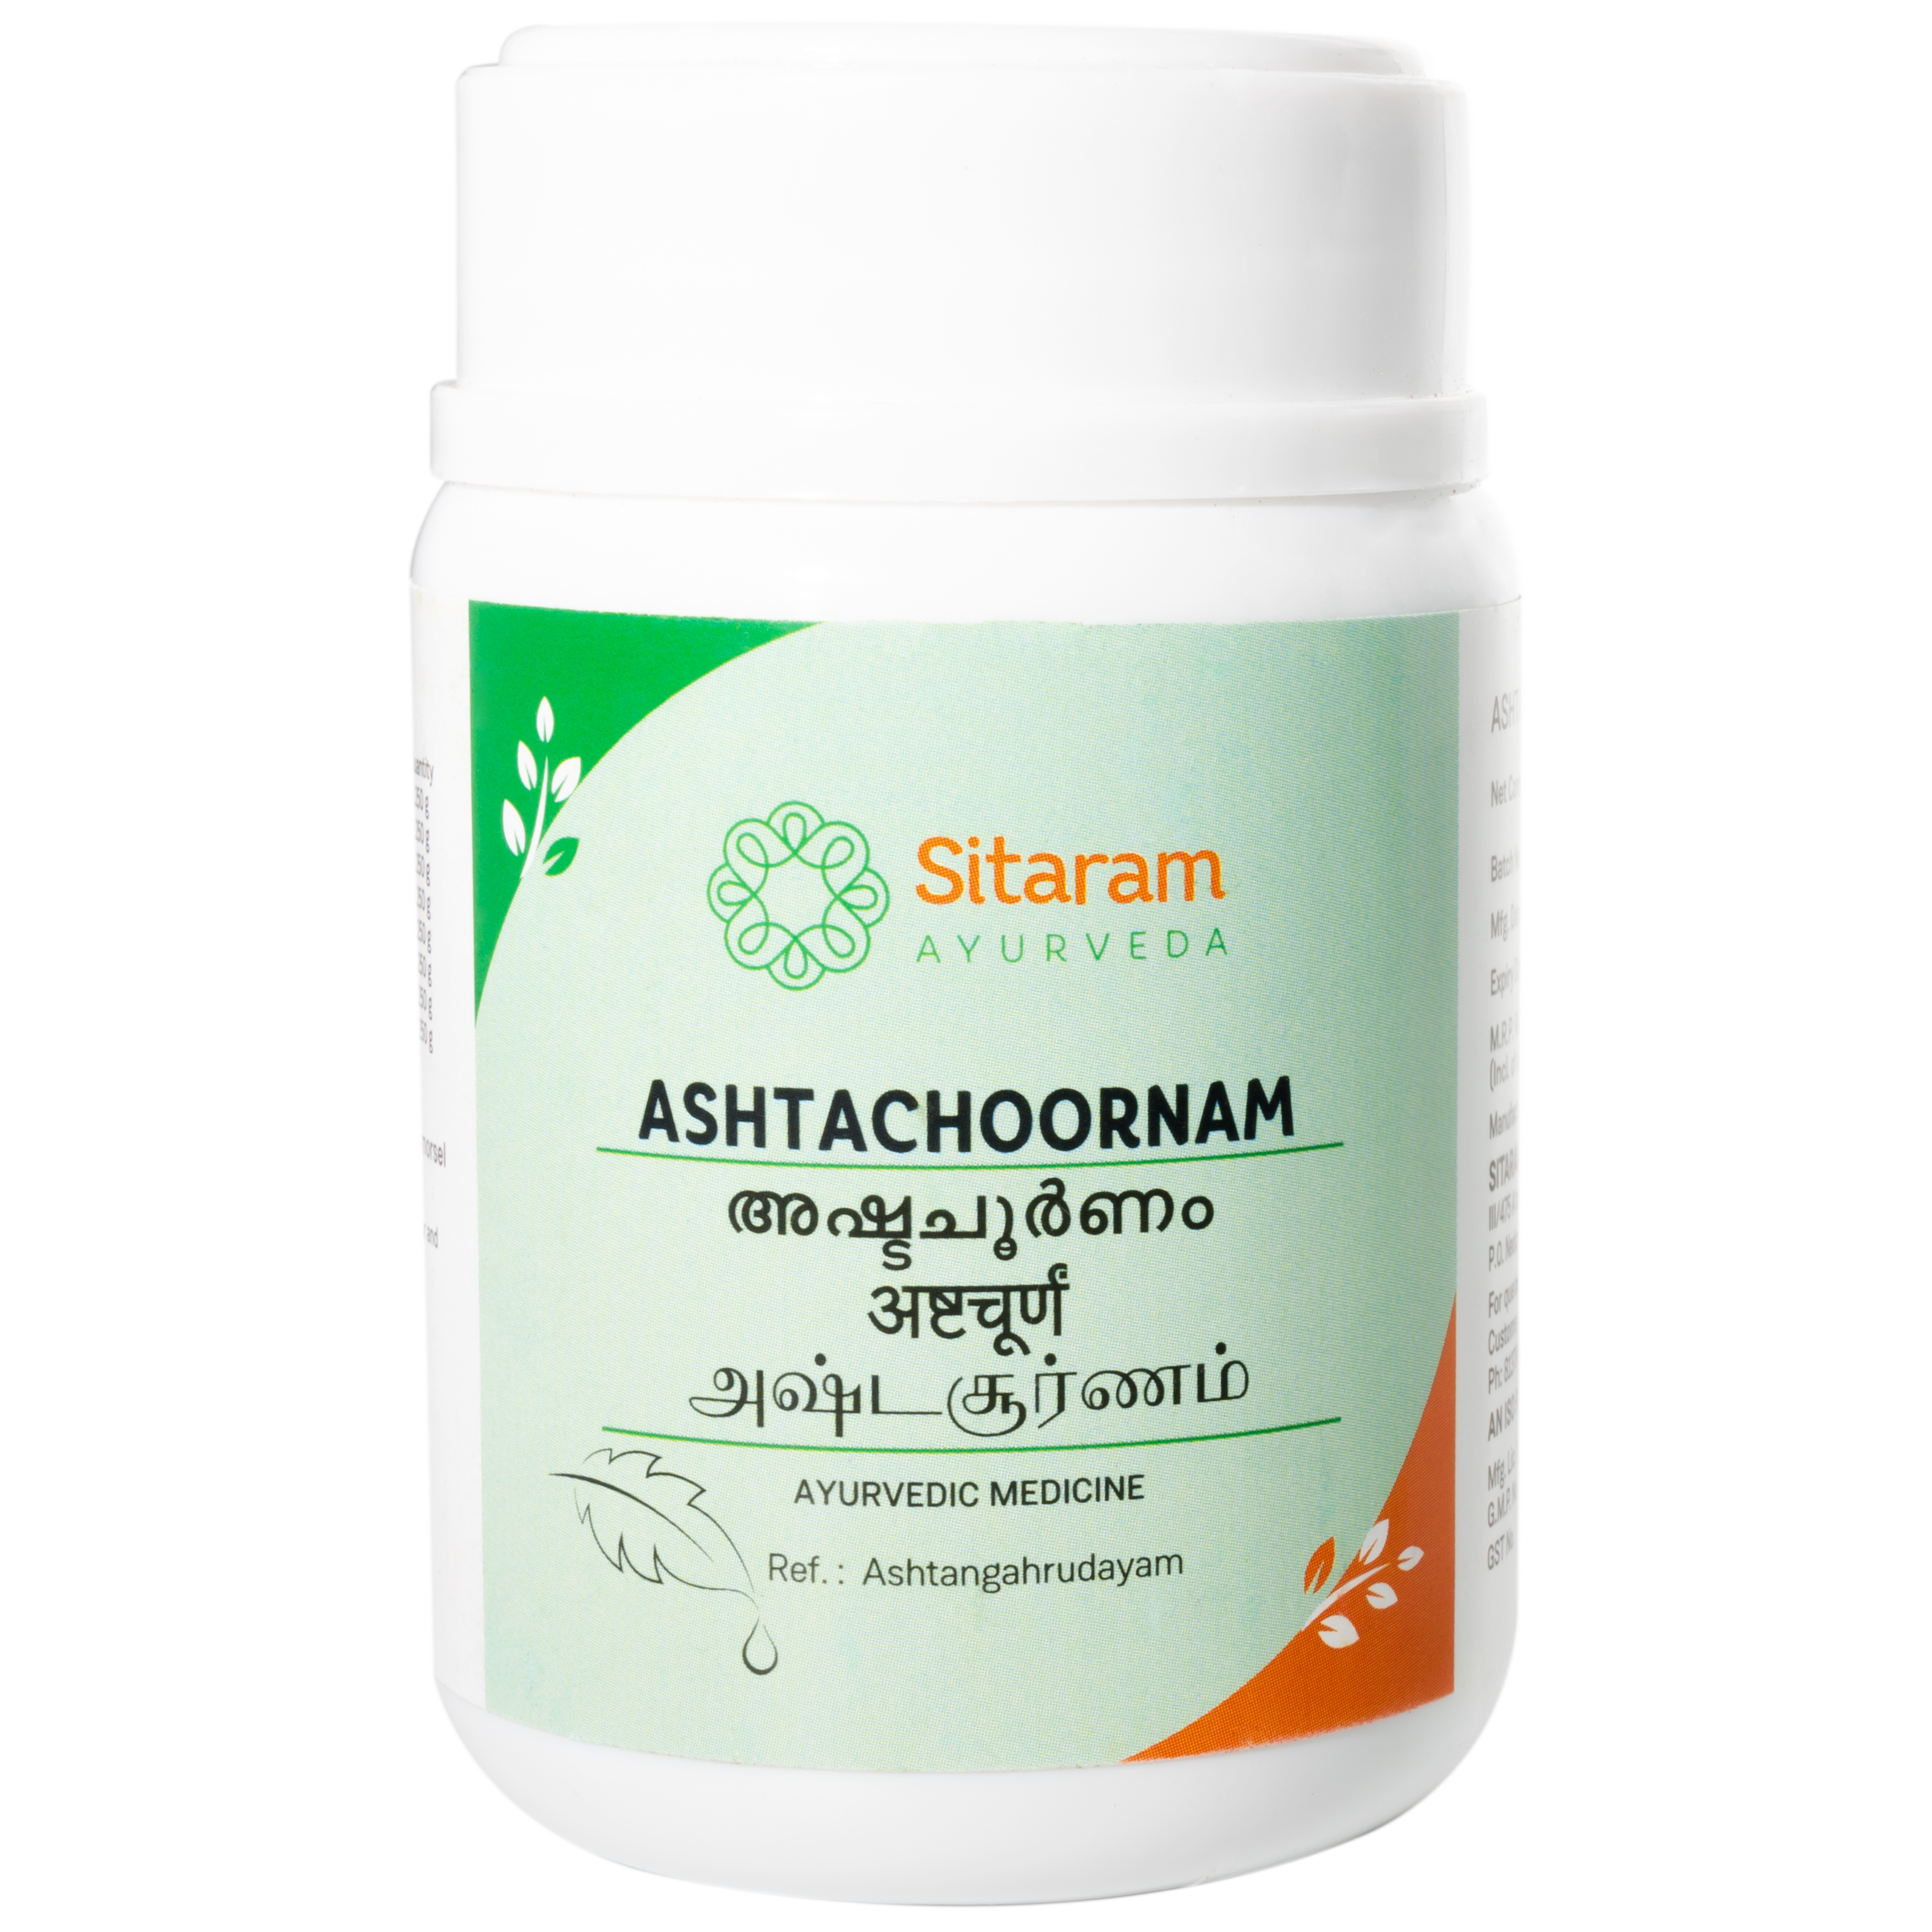 Sitaram Ayurveda Ashta Choornam 50 Grm - Pack of 2 (Prescription Medication)